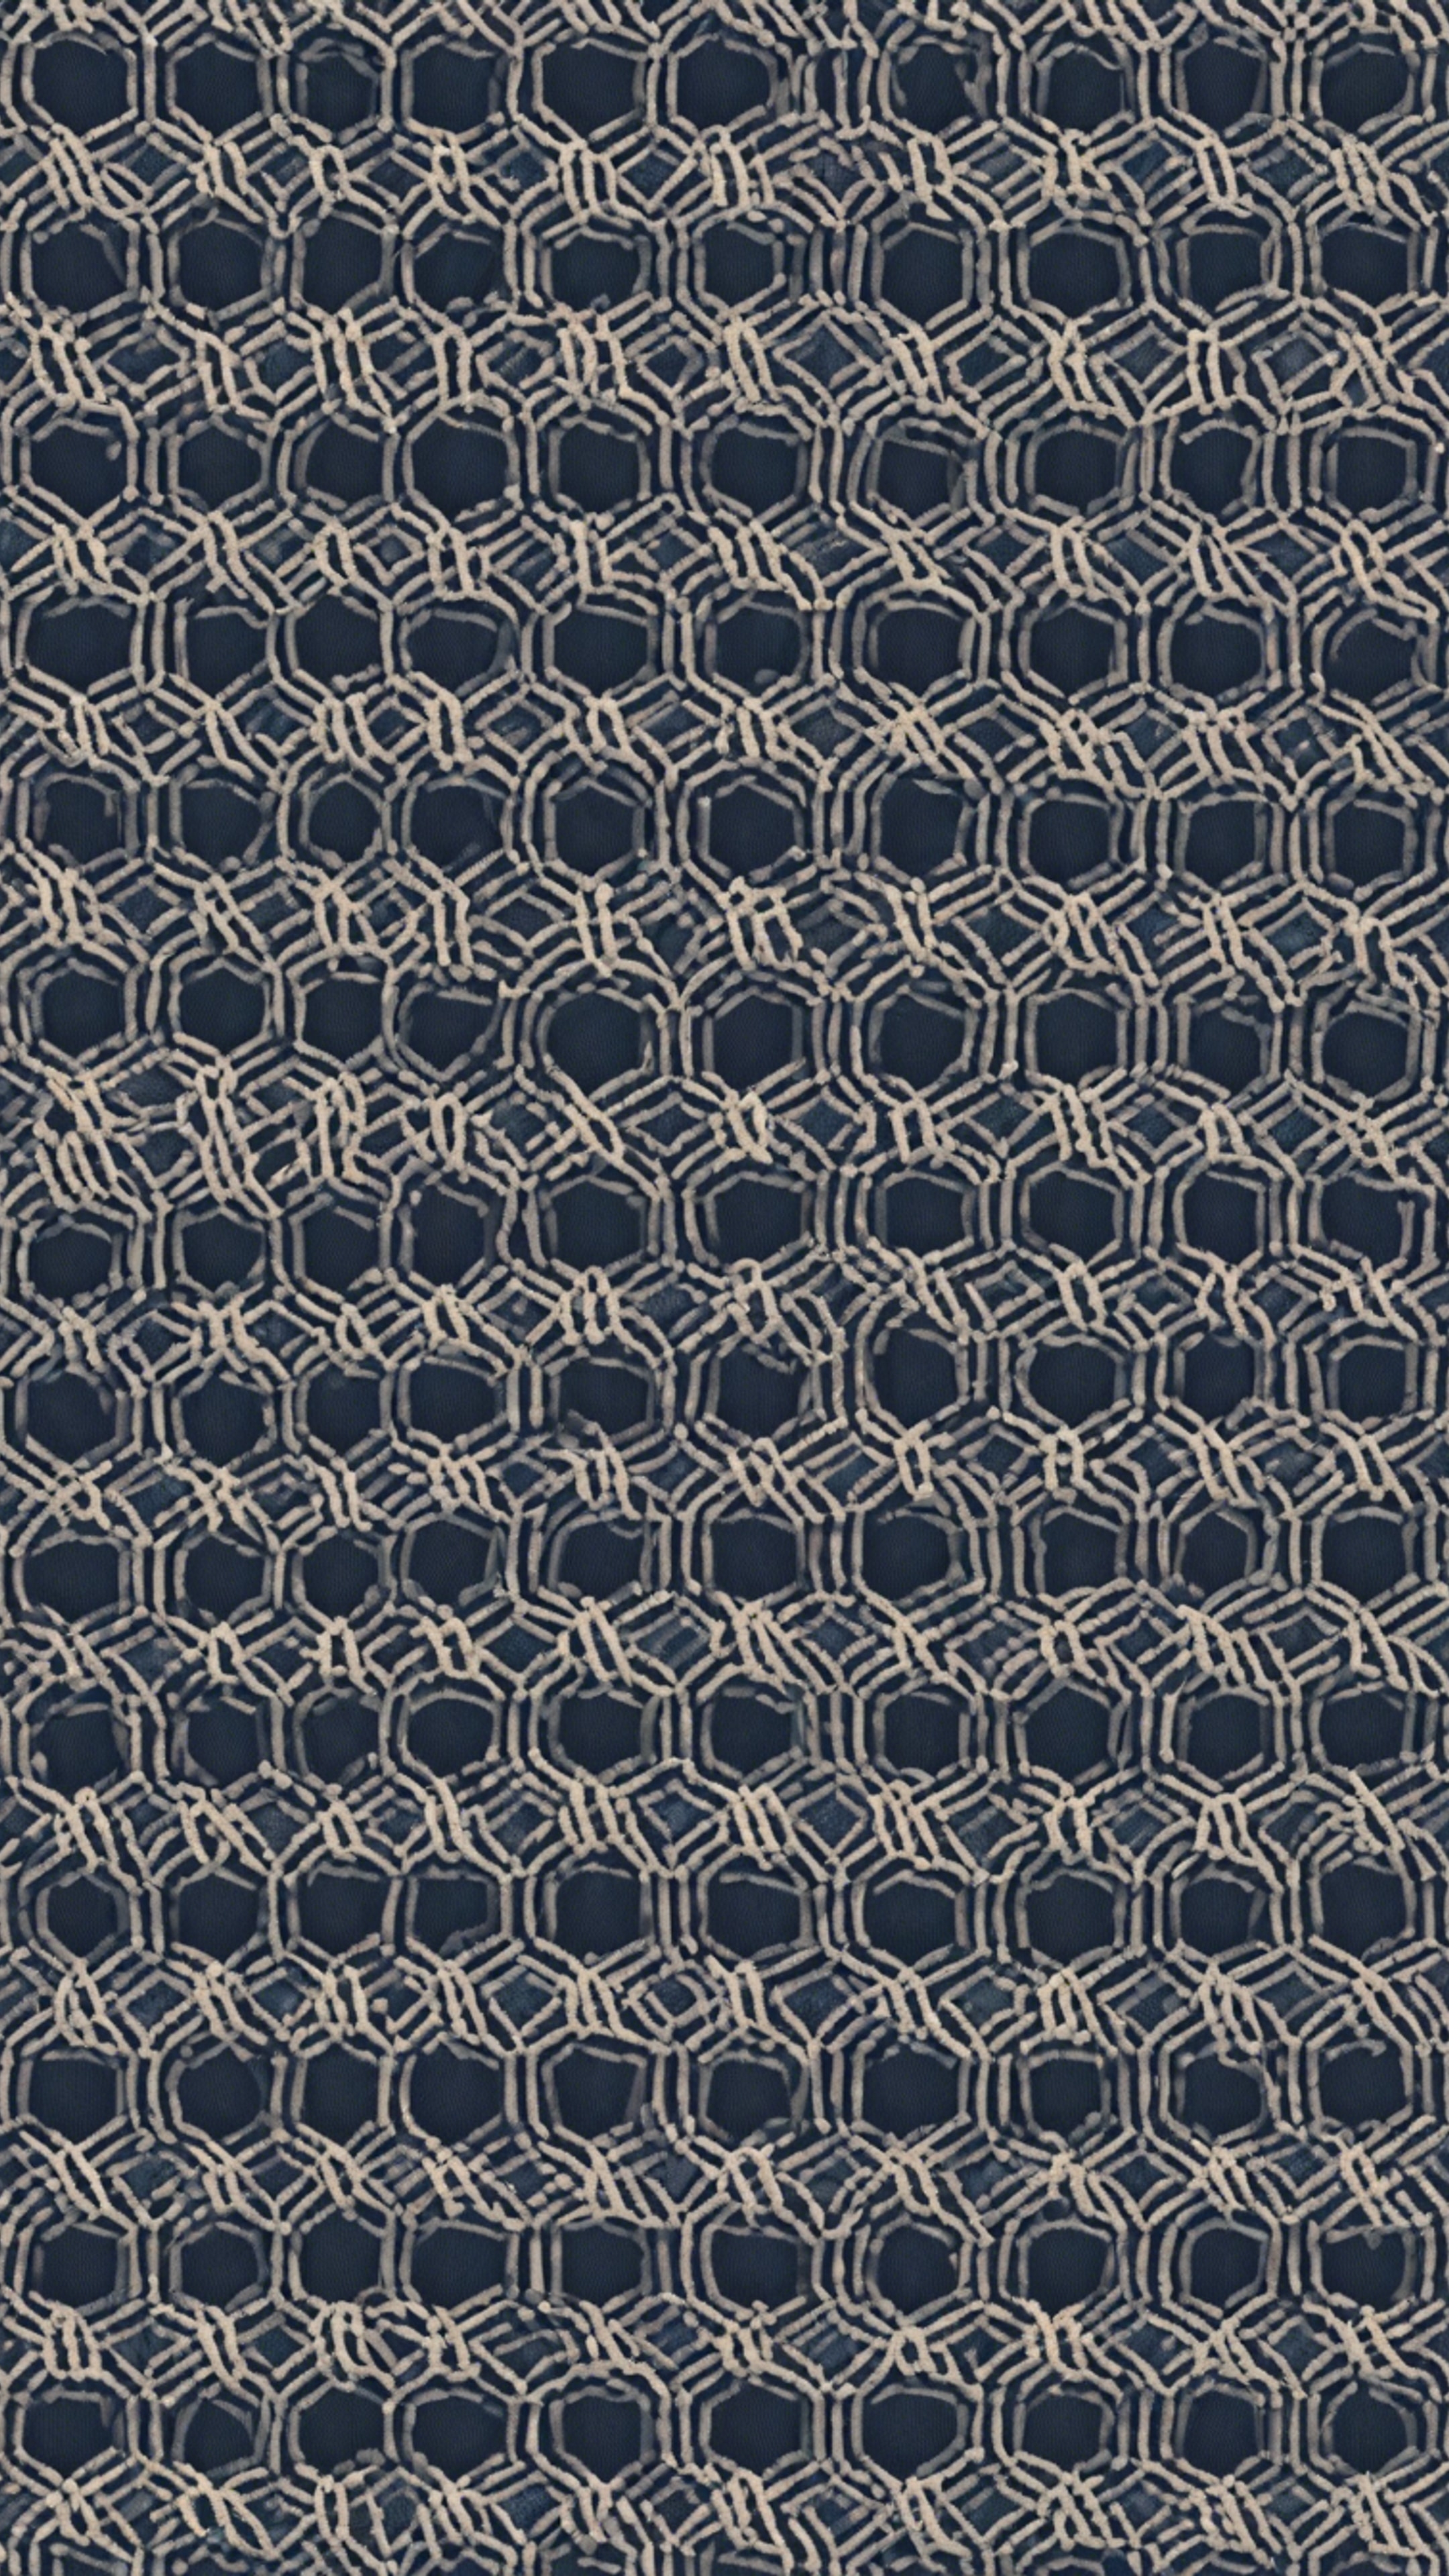 A geometric seamless pattern inspired by traditional Japanese sashiko stitching Тапет[d49f05622a7b4579b9ed]